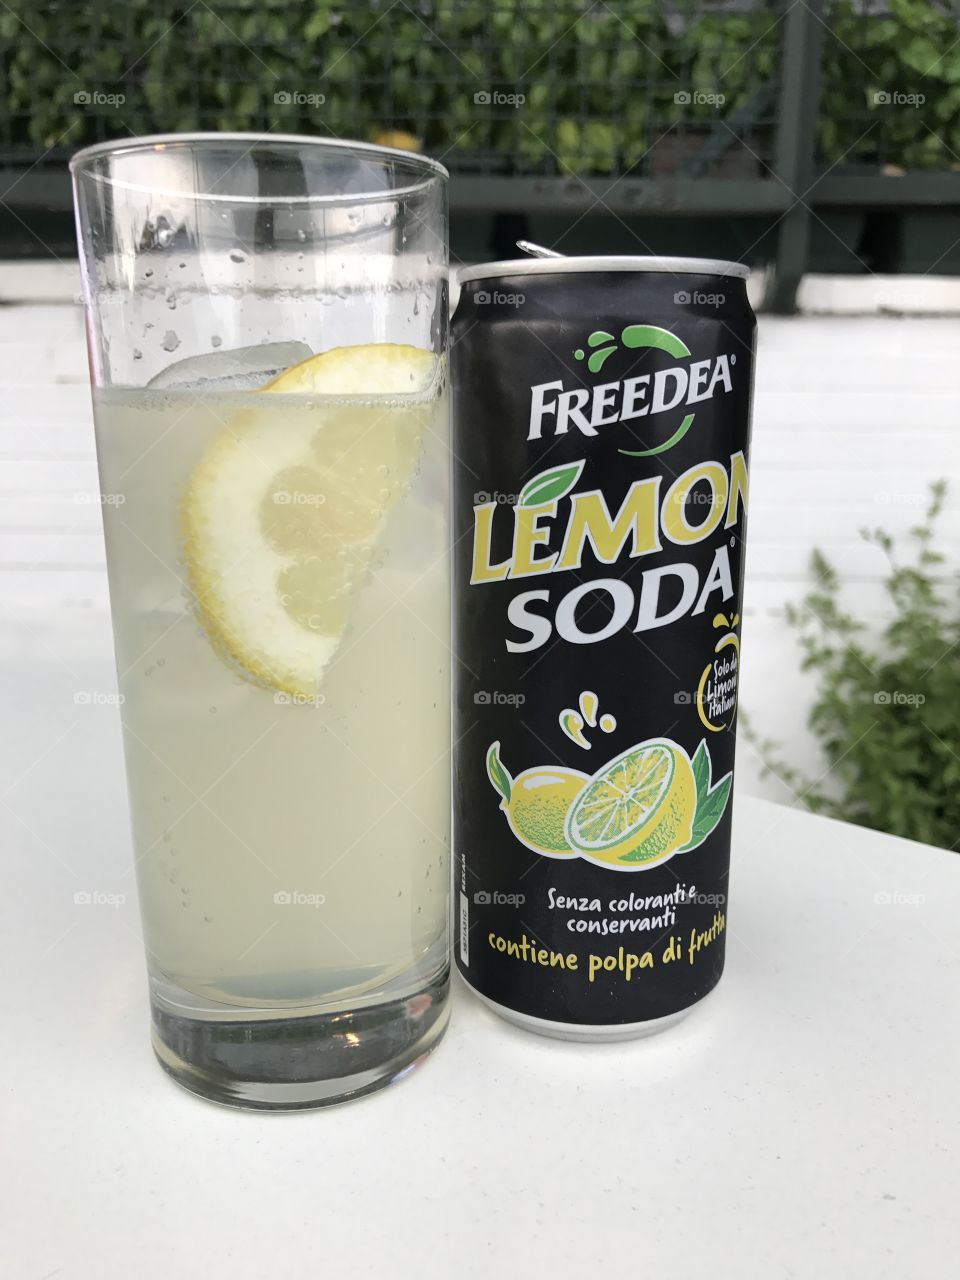 Lemon soda in Europe.